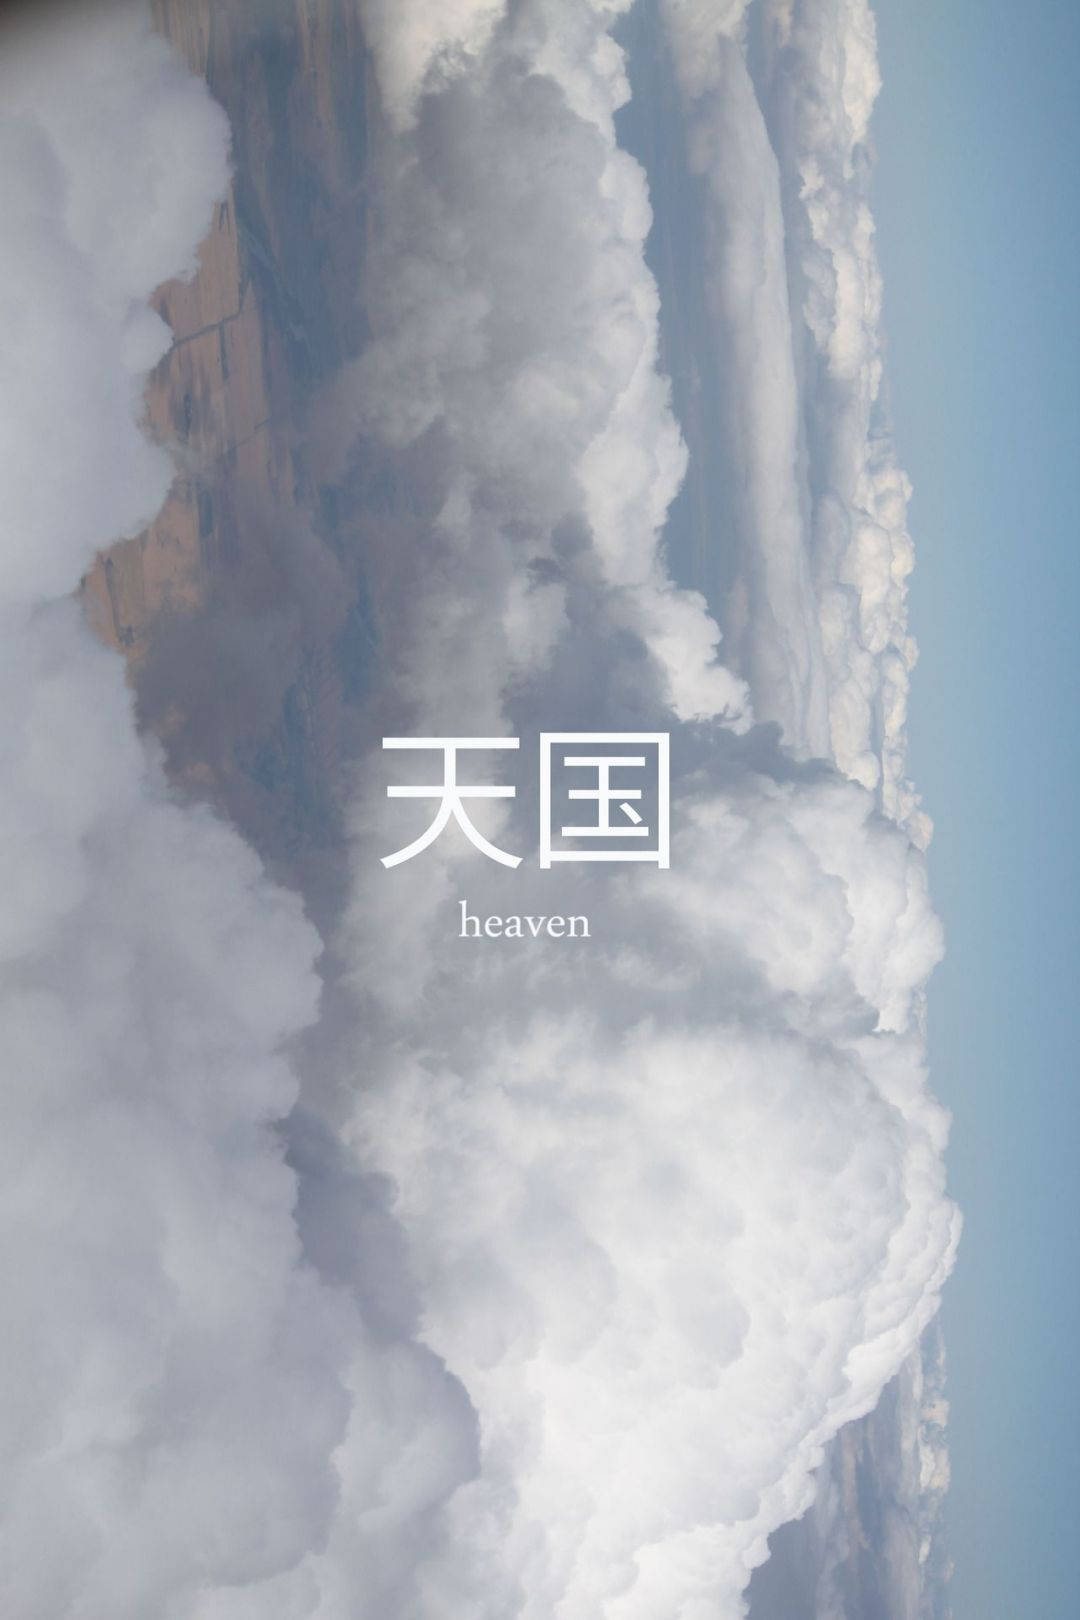 White Aesthetic Tumblr Clouds Heaven Kanji Background